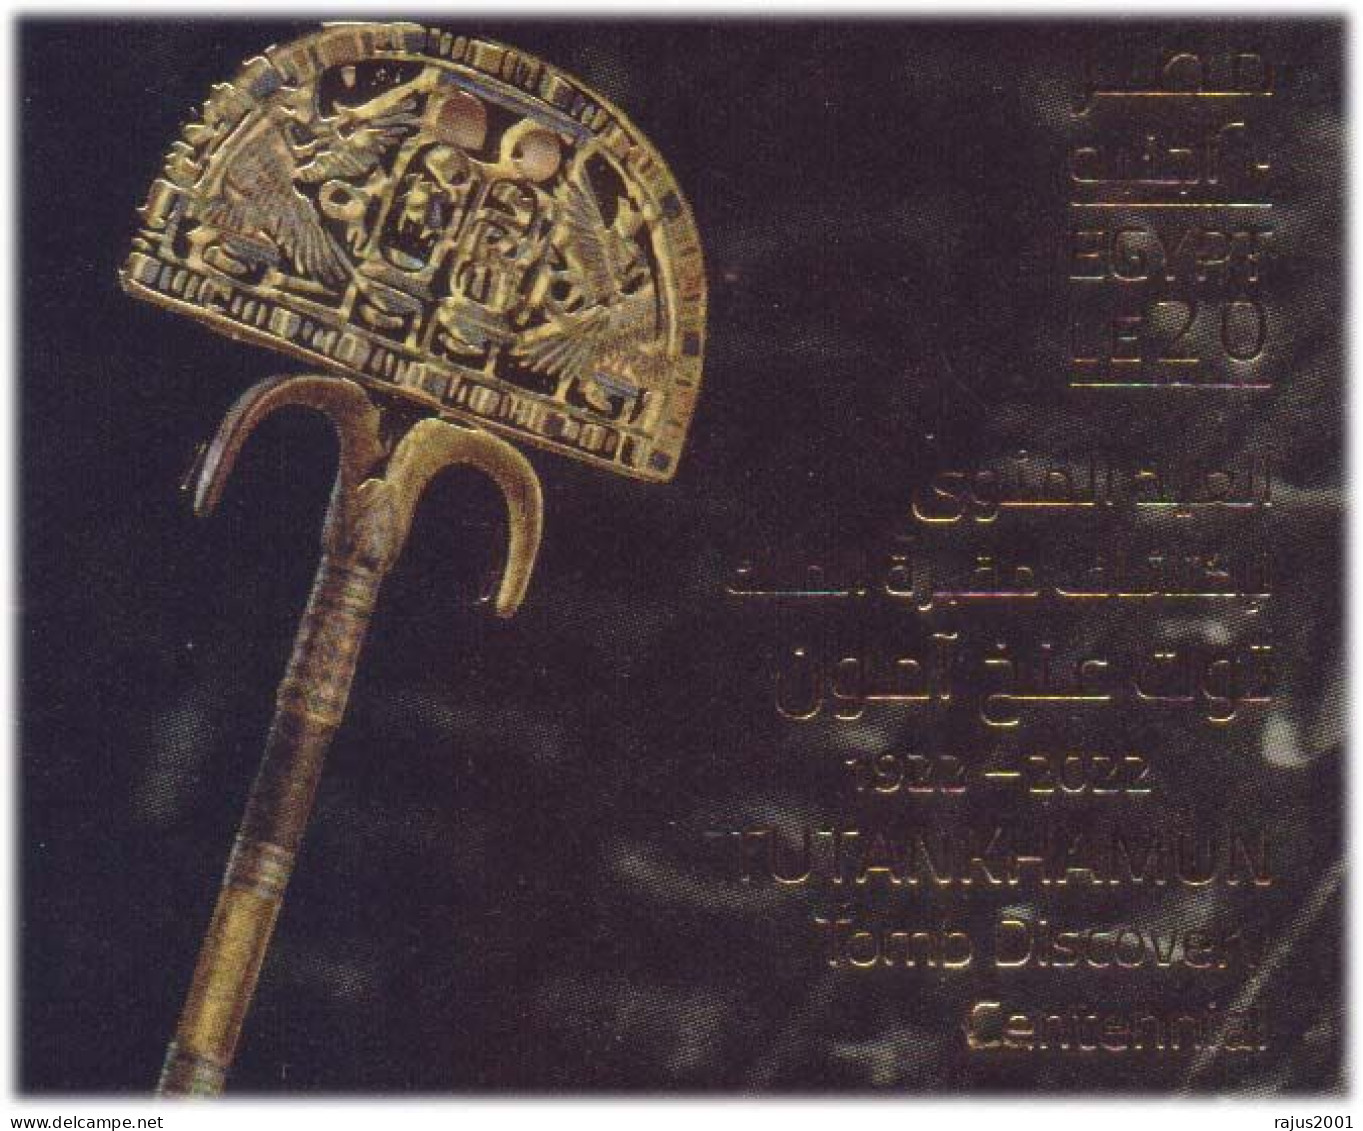 King Tutankhamun Tomb Discovery, Tutankhamun, Tutankhamen, Pharaoh, Egyptology, History, GOLD PRINT UNUSUAL 4x Post Card - Egittologia